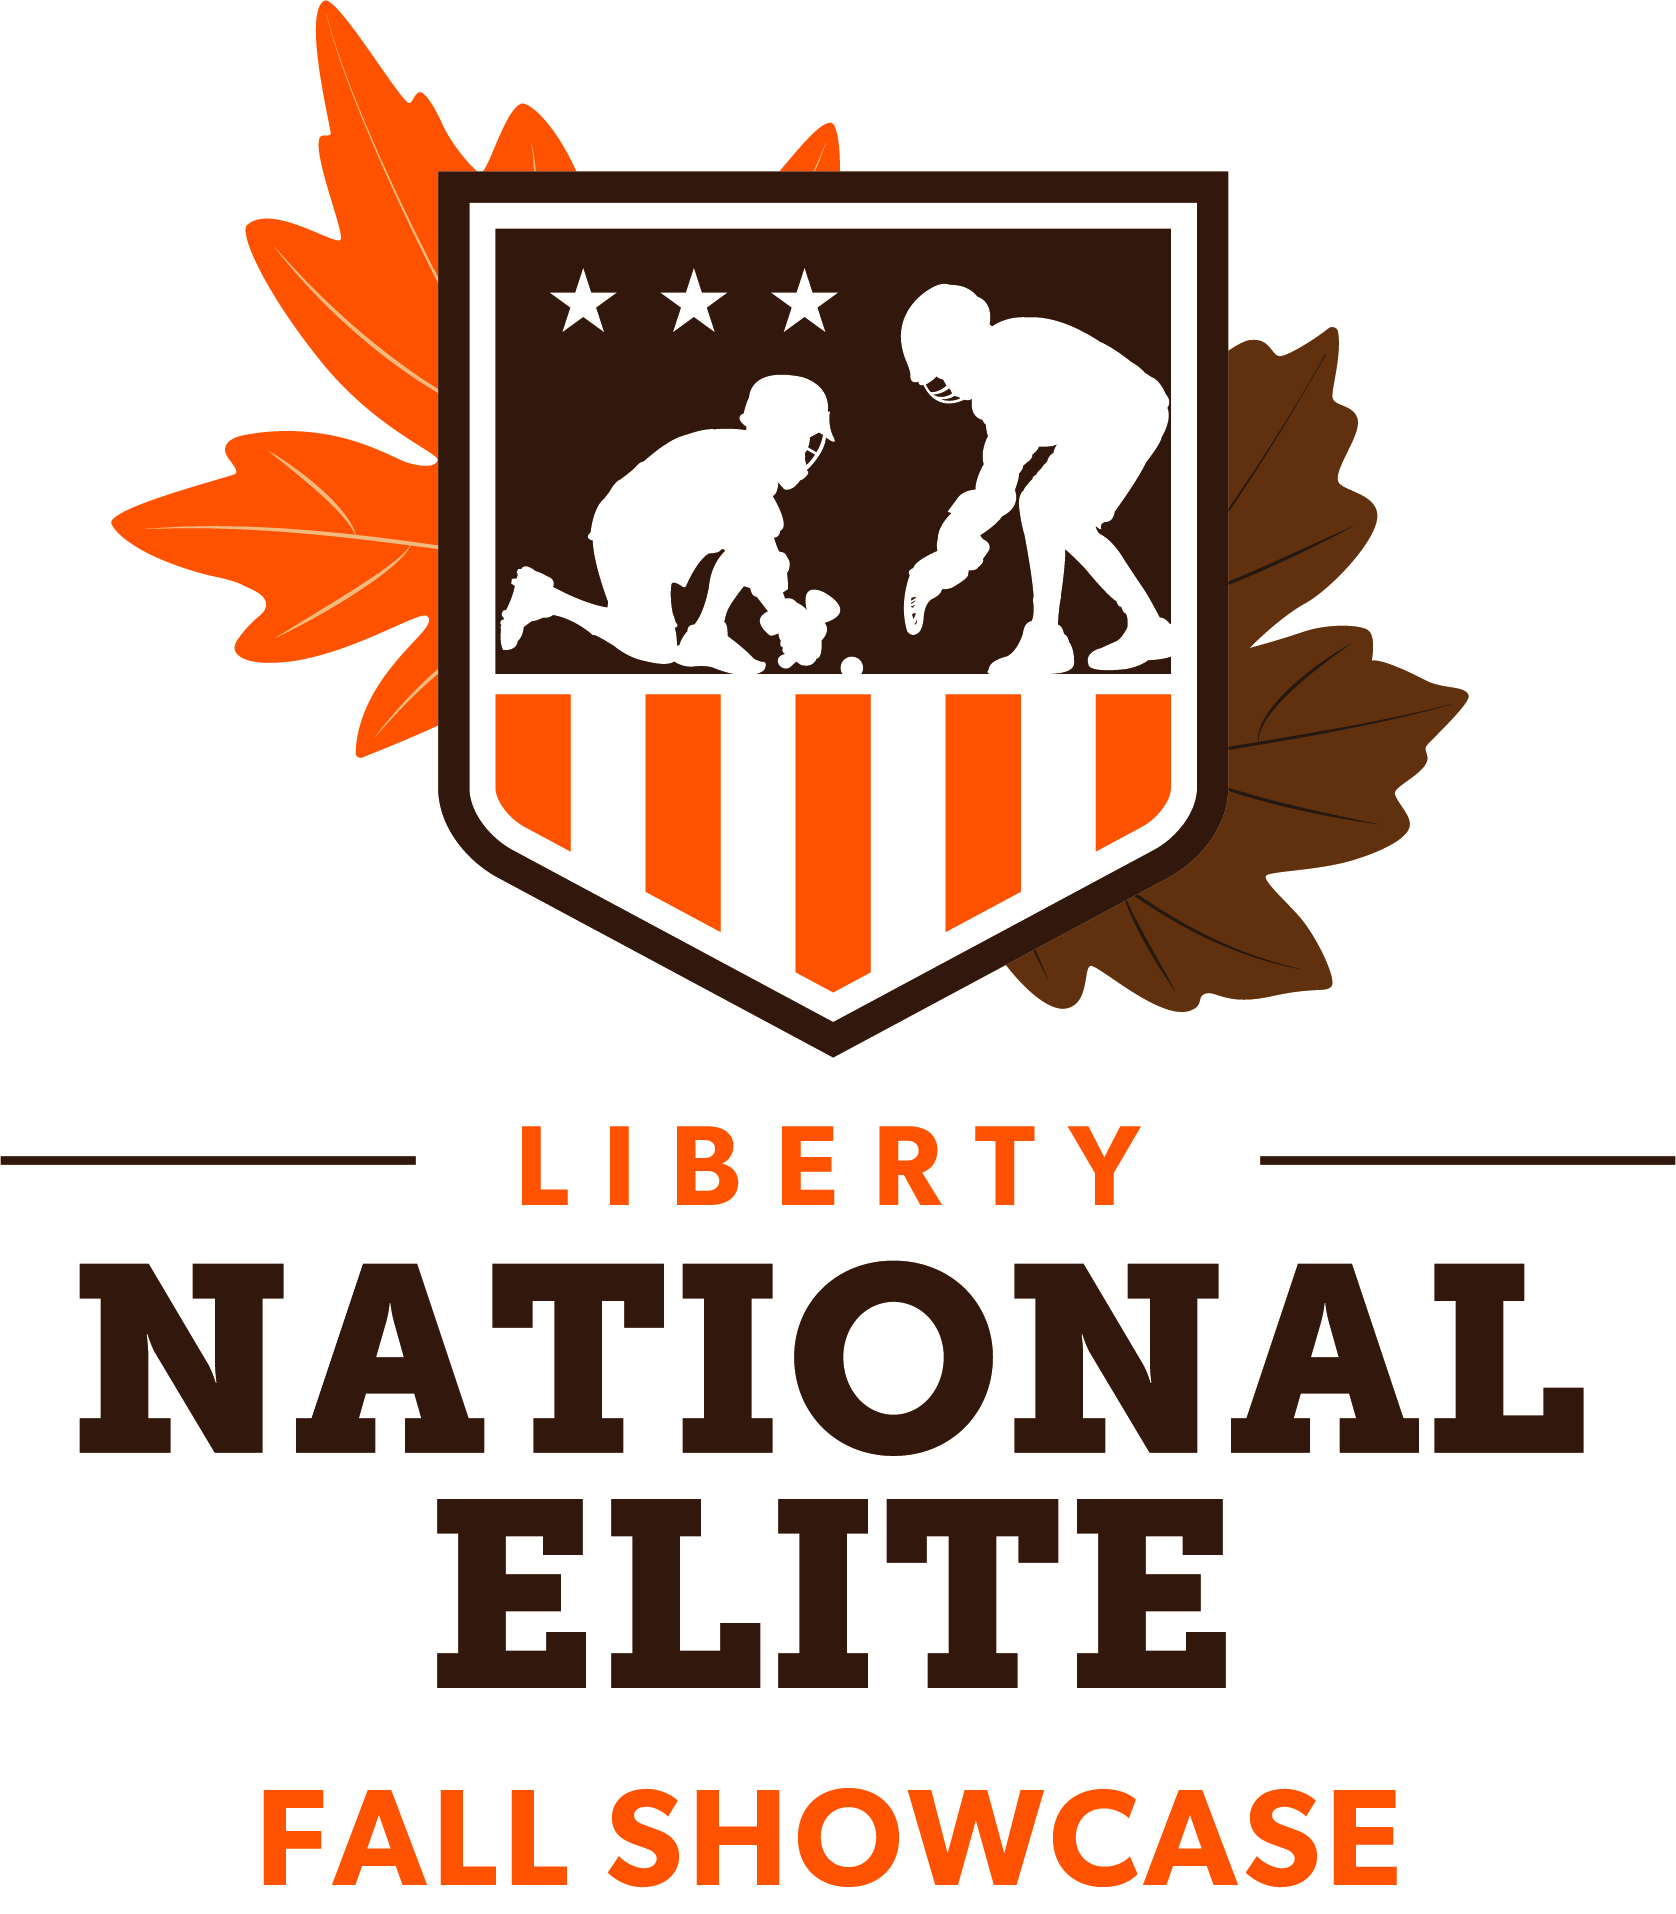 Liberty National Elite Fall Showcase